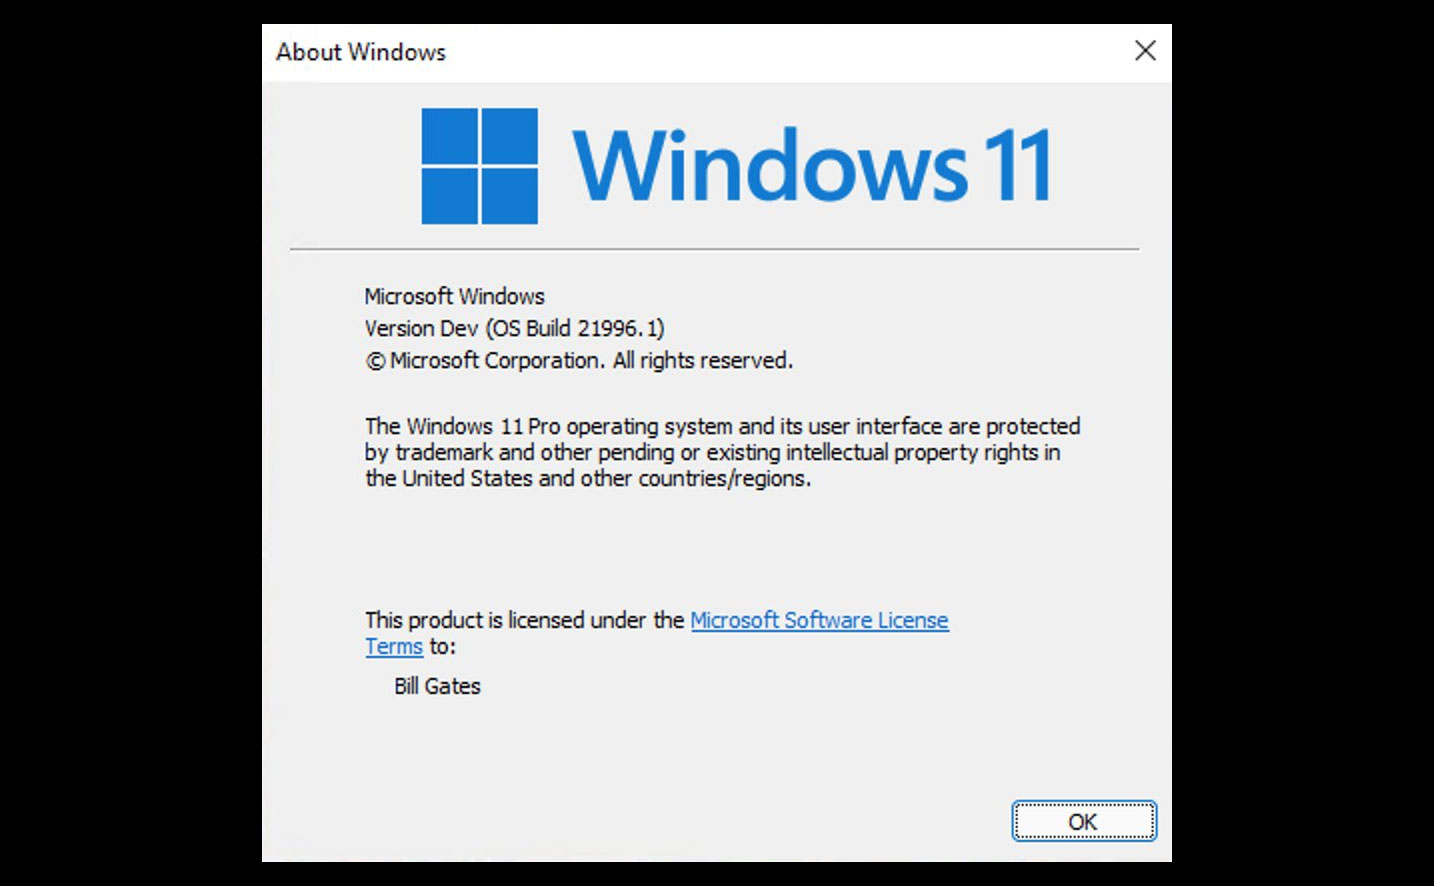 download windows 11 iso build 21996.1